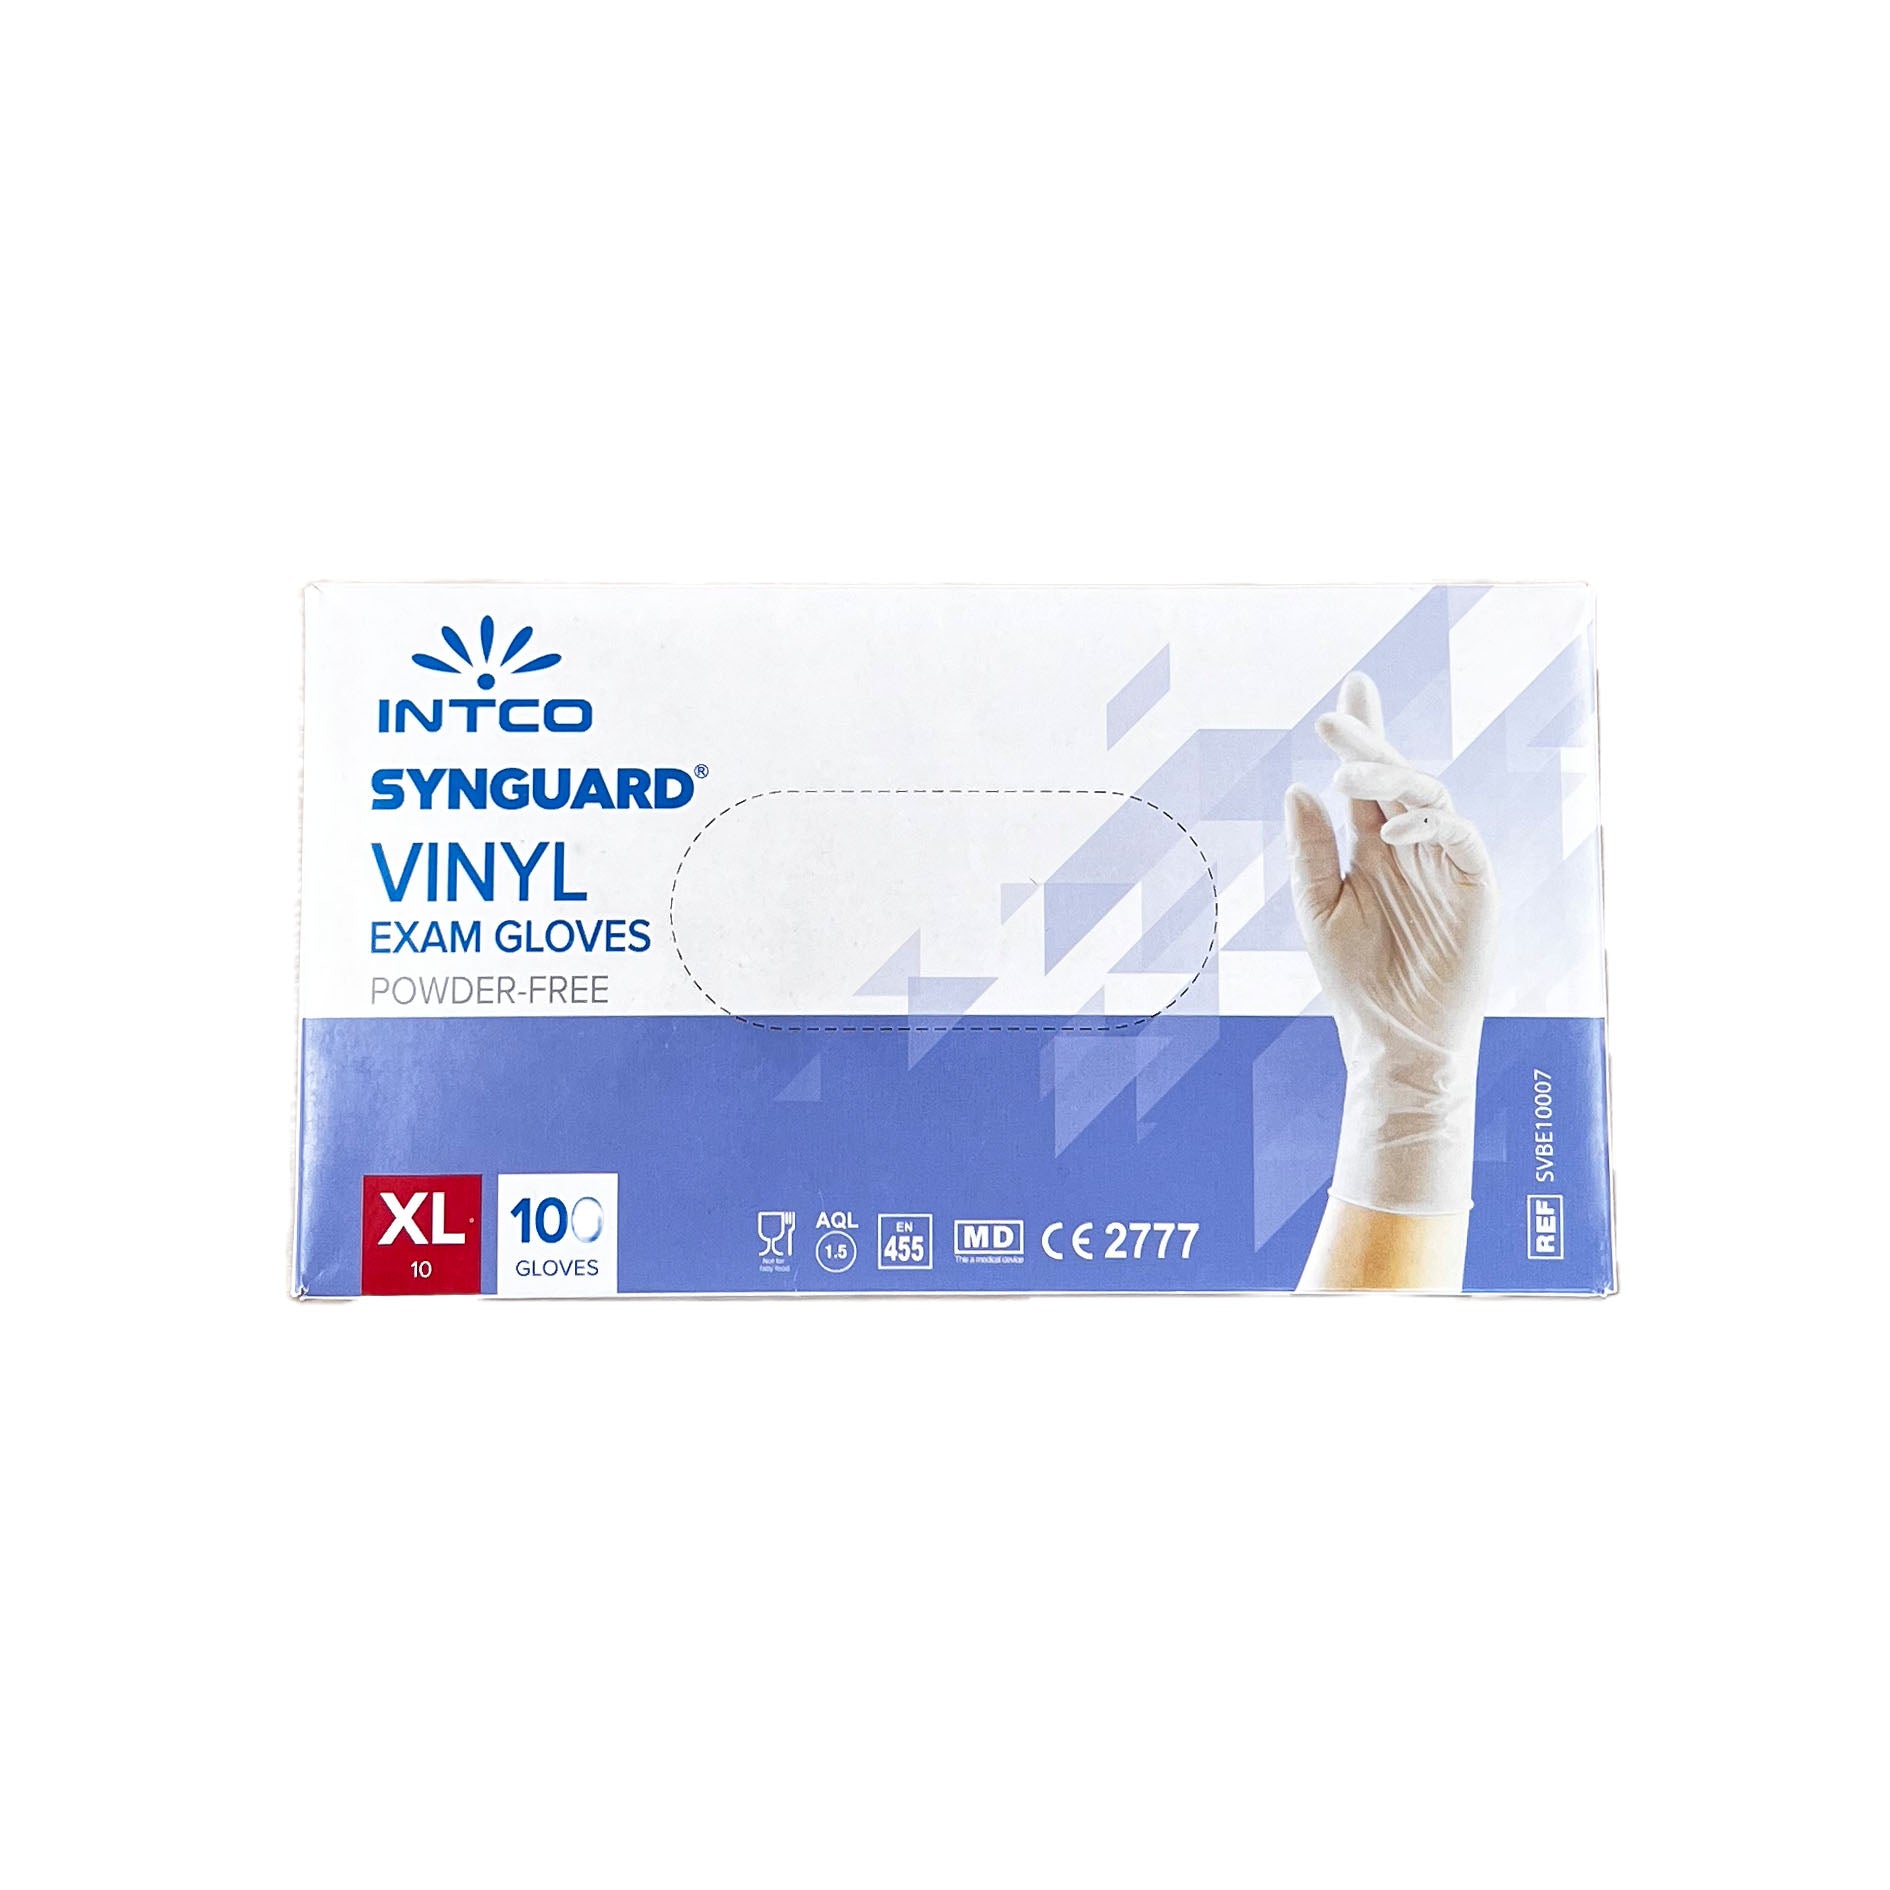 Intco Synguard Vinyl Gloves